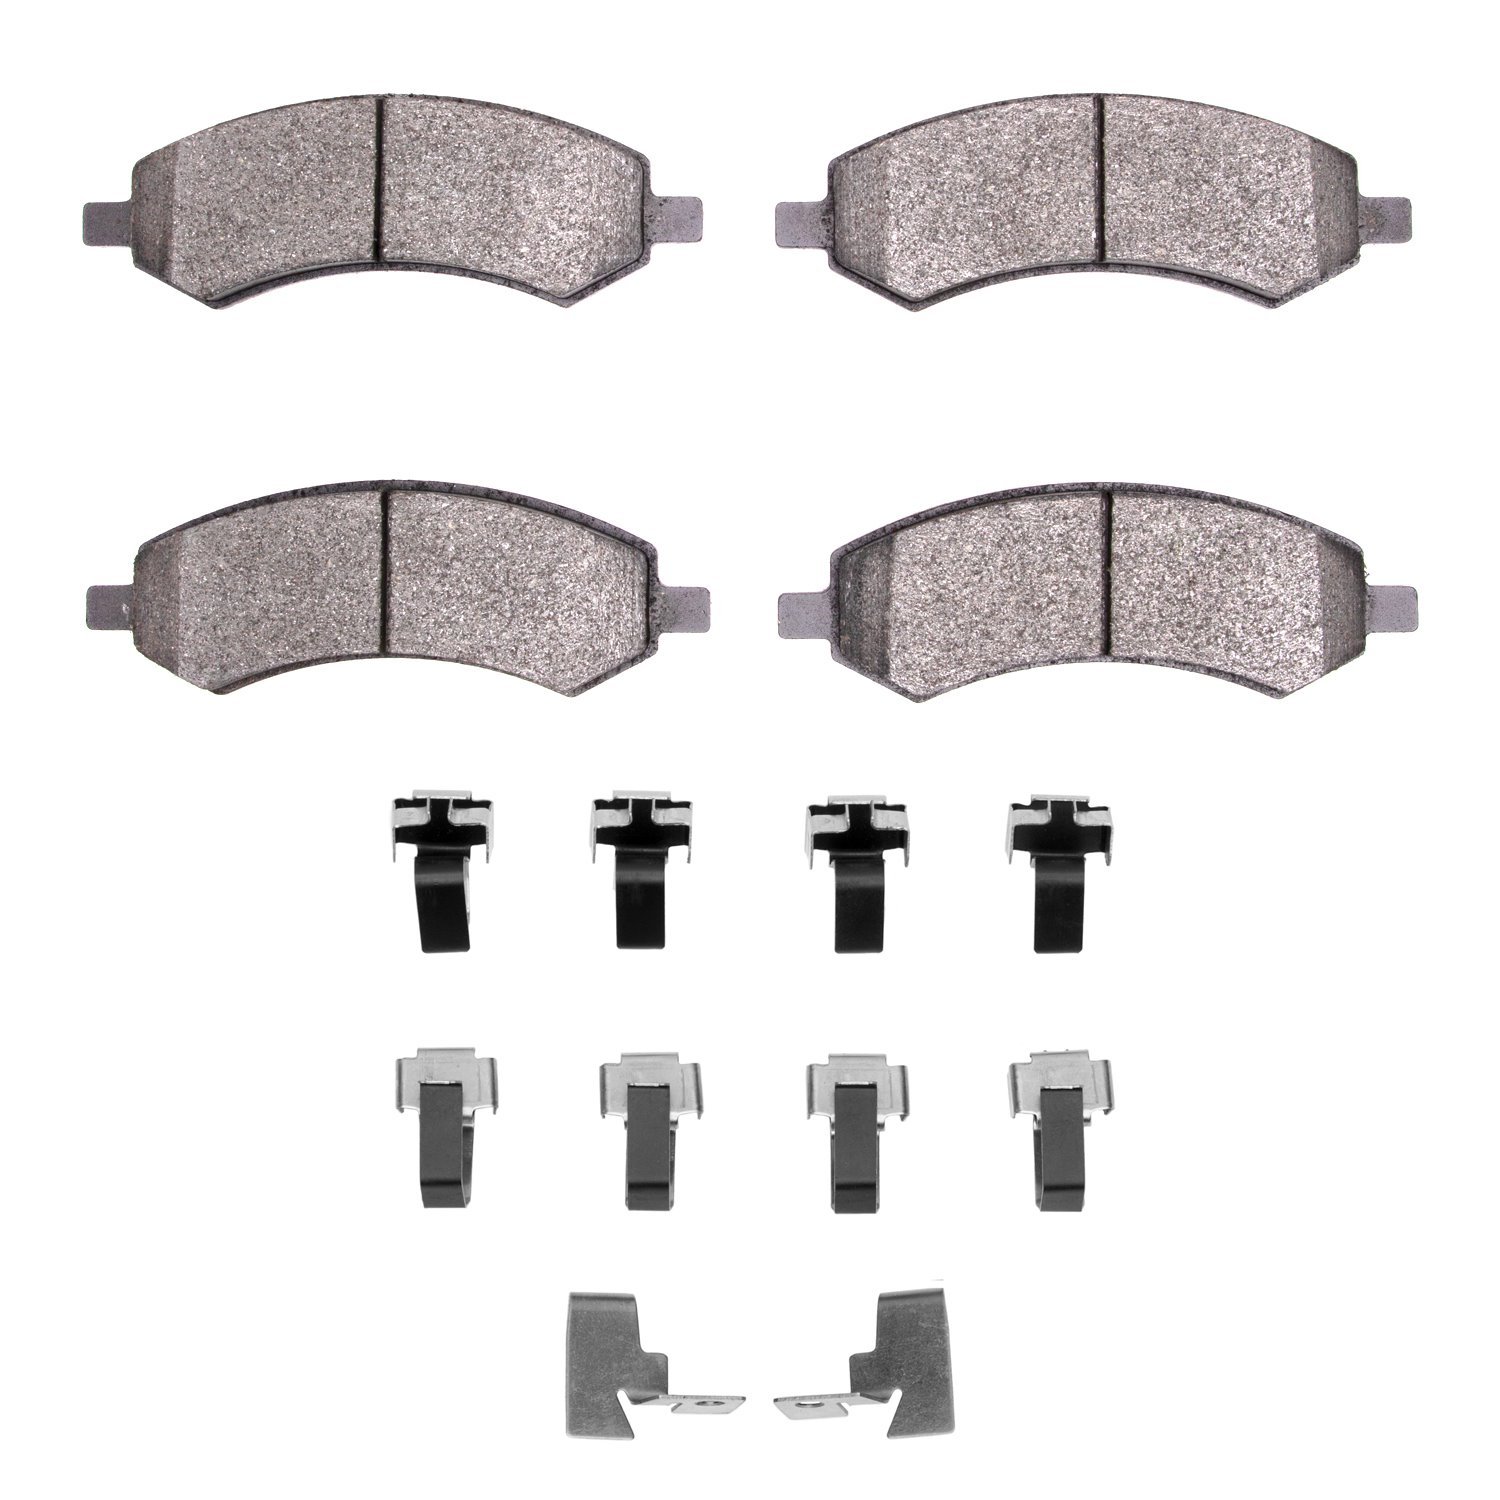 1310-1084-01 3000-Series Ceramic Brake Pads & Hardware Kit, Fits Select Multiple Makes/Models, Position: Front